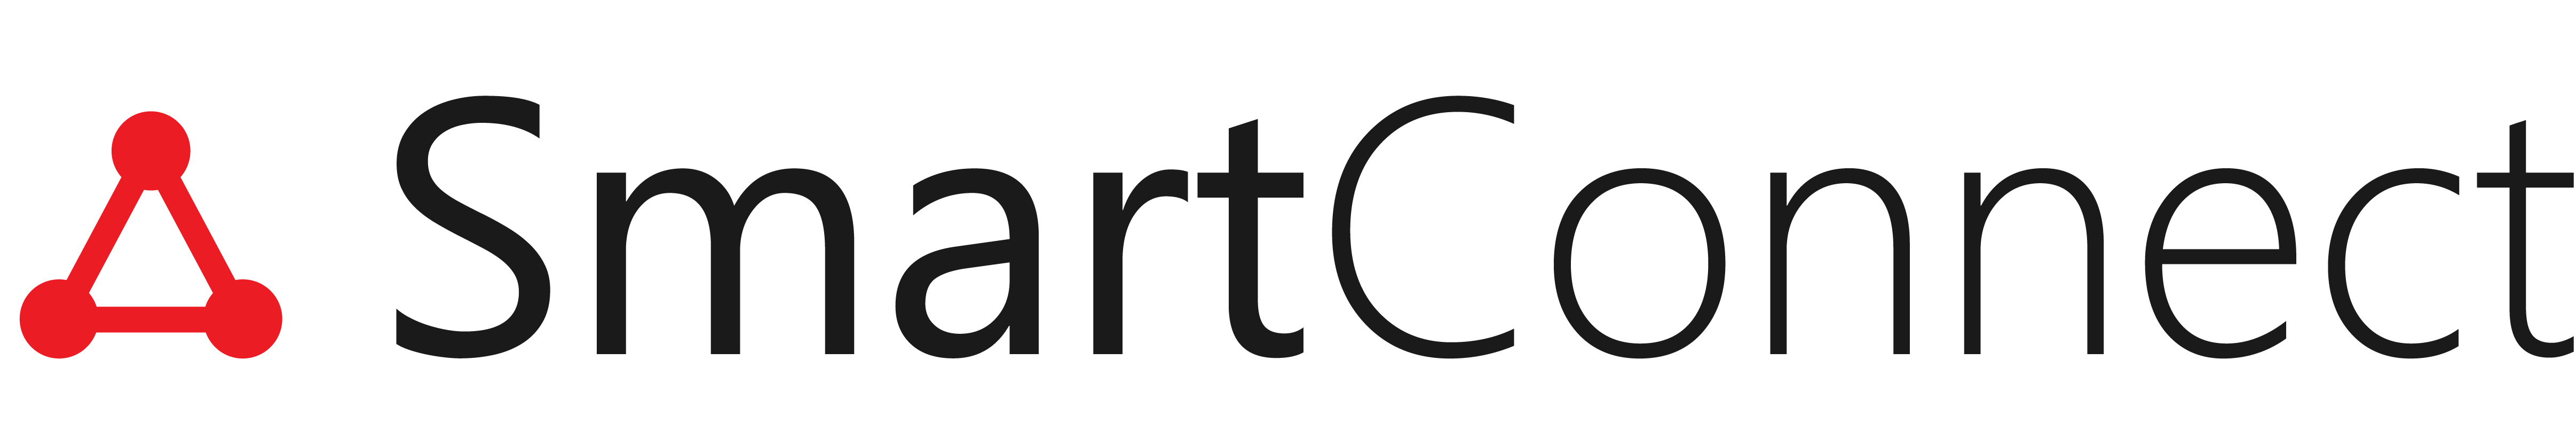 SmartConnect Logo